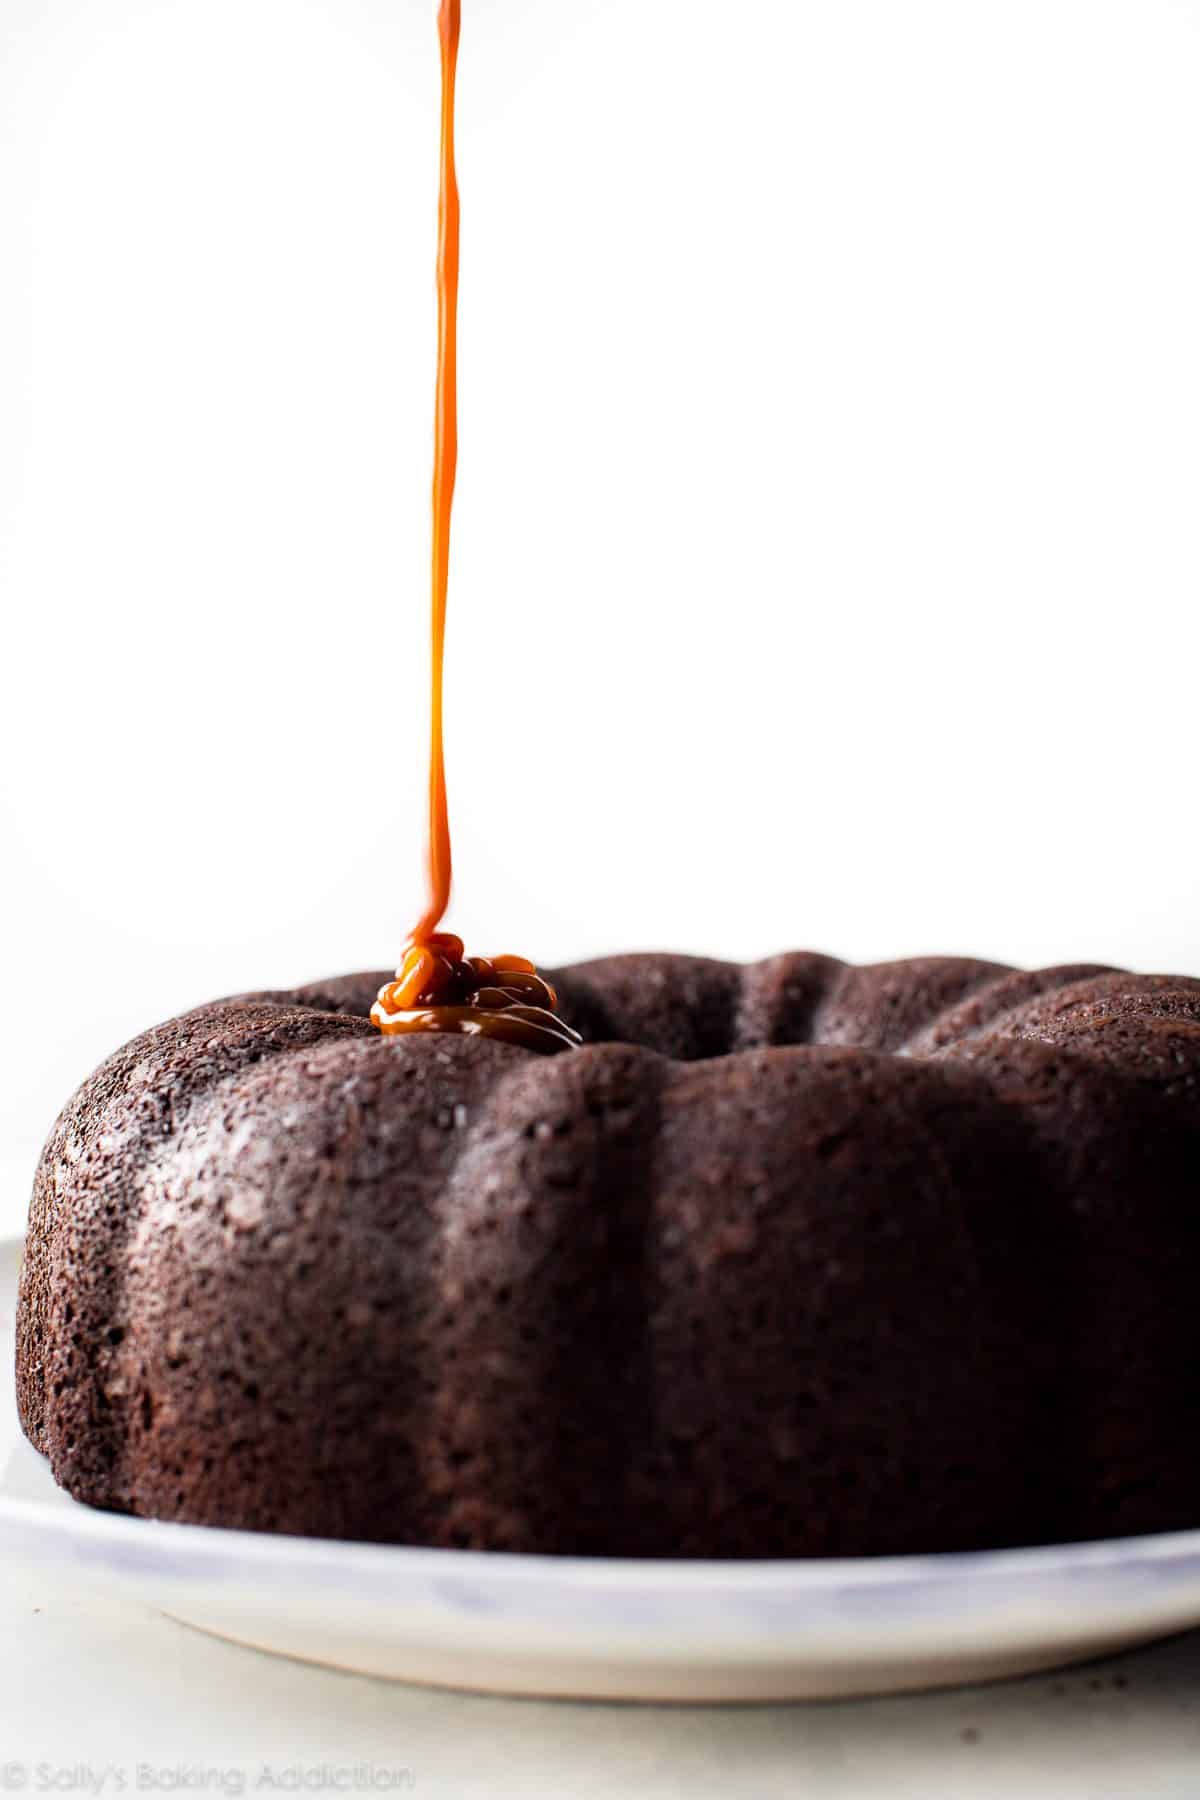 drizzling salted caramel onto chocolate bundt cake